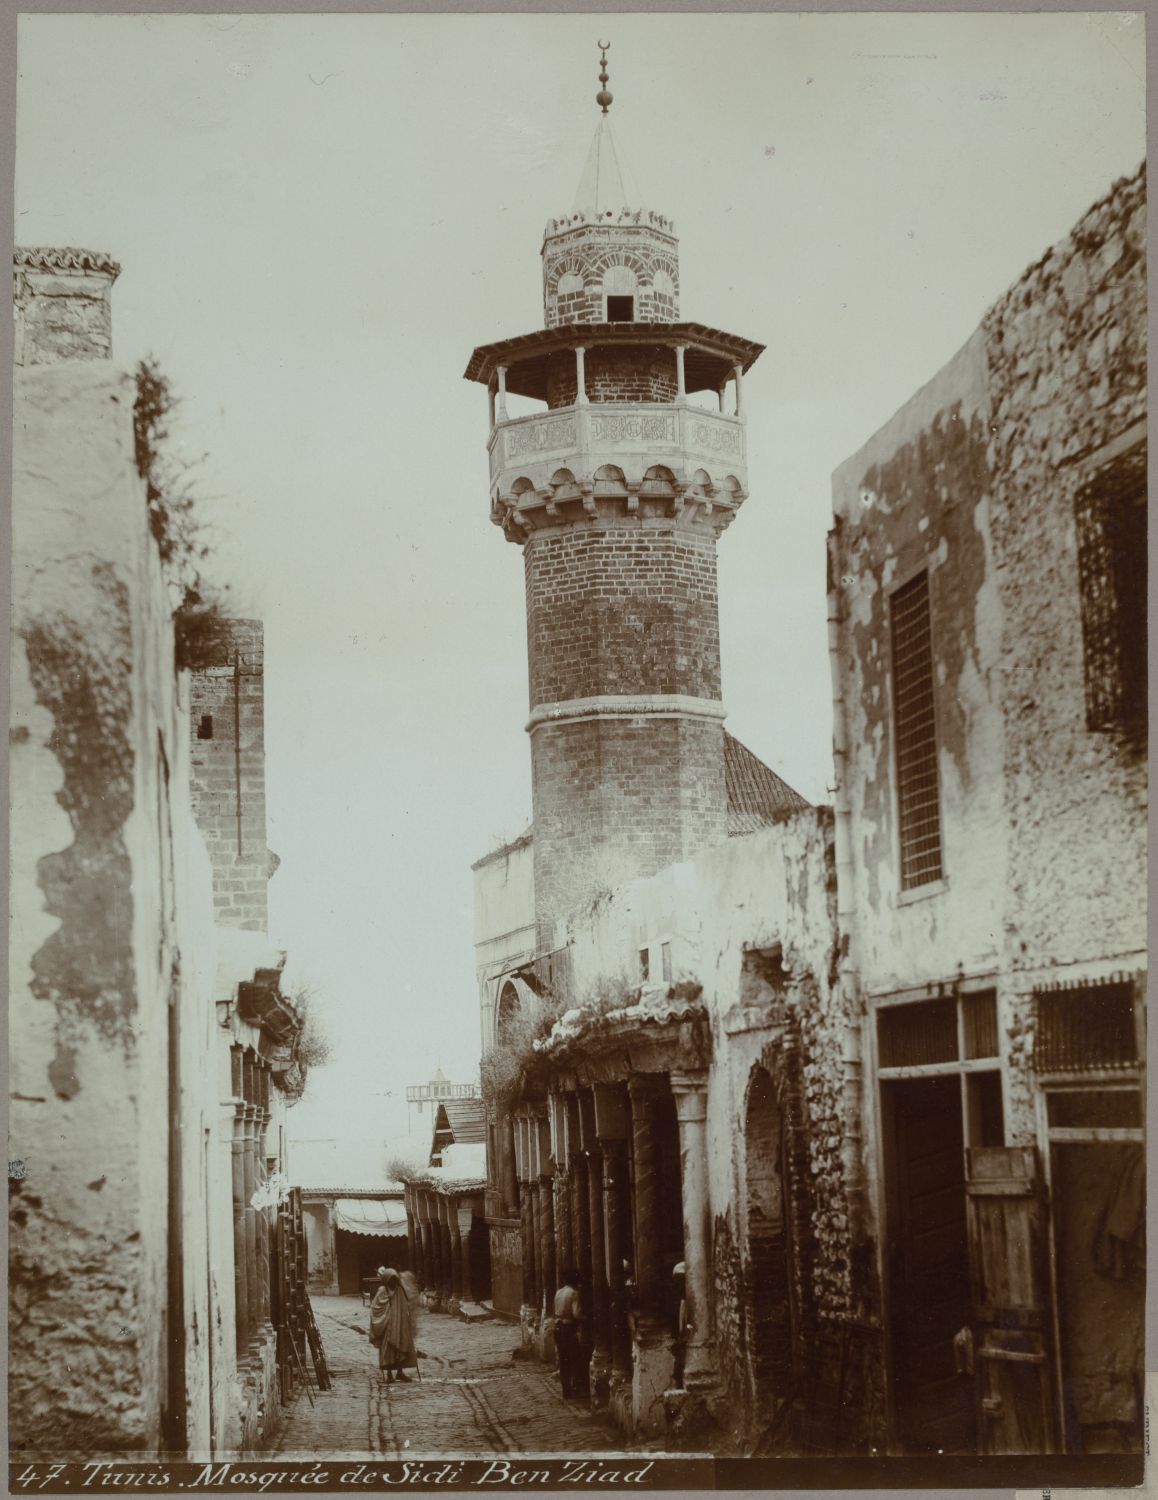 View of the octagonal minaret